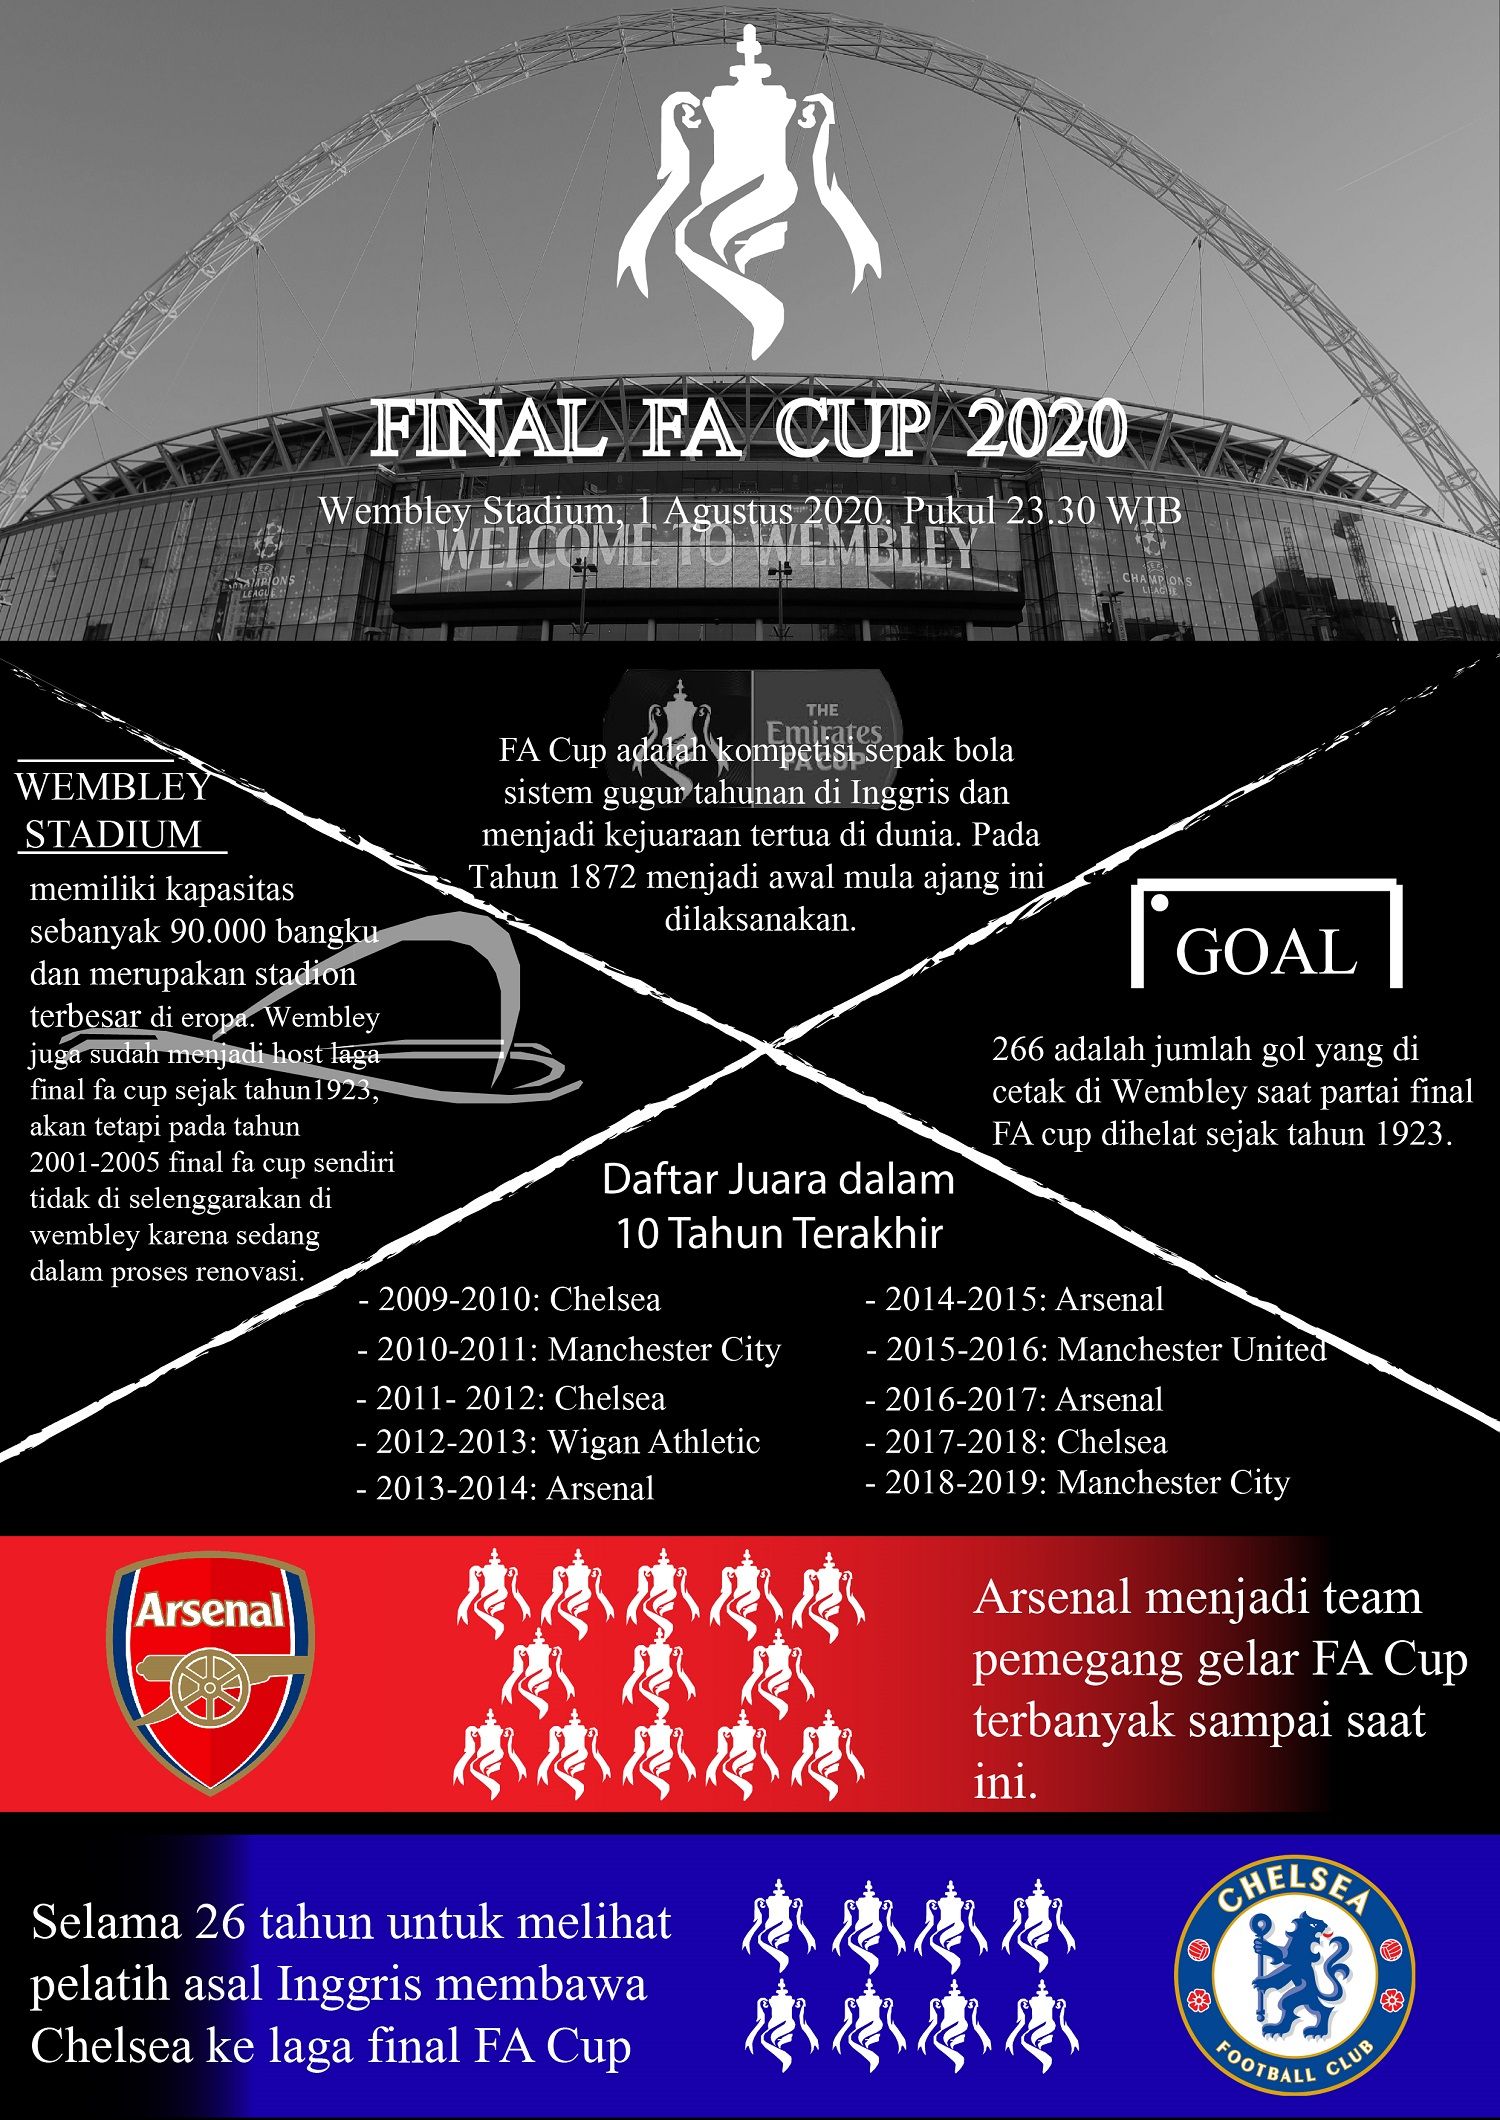 Fakta-fakta dan Sejarah Final FA sejak 1871-72 hingga kini. Arsenal tercatat menjadi team pemenang FA Cup hingga kini, dan Chelsea selama 26 tahun  didampingi pelatih asal Inggris di final FA Cup. *Infografis M. Randu